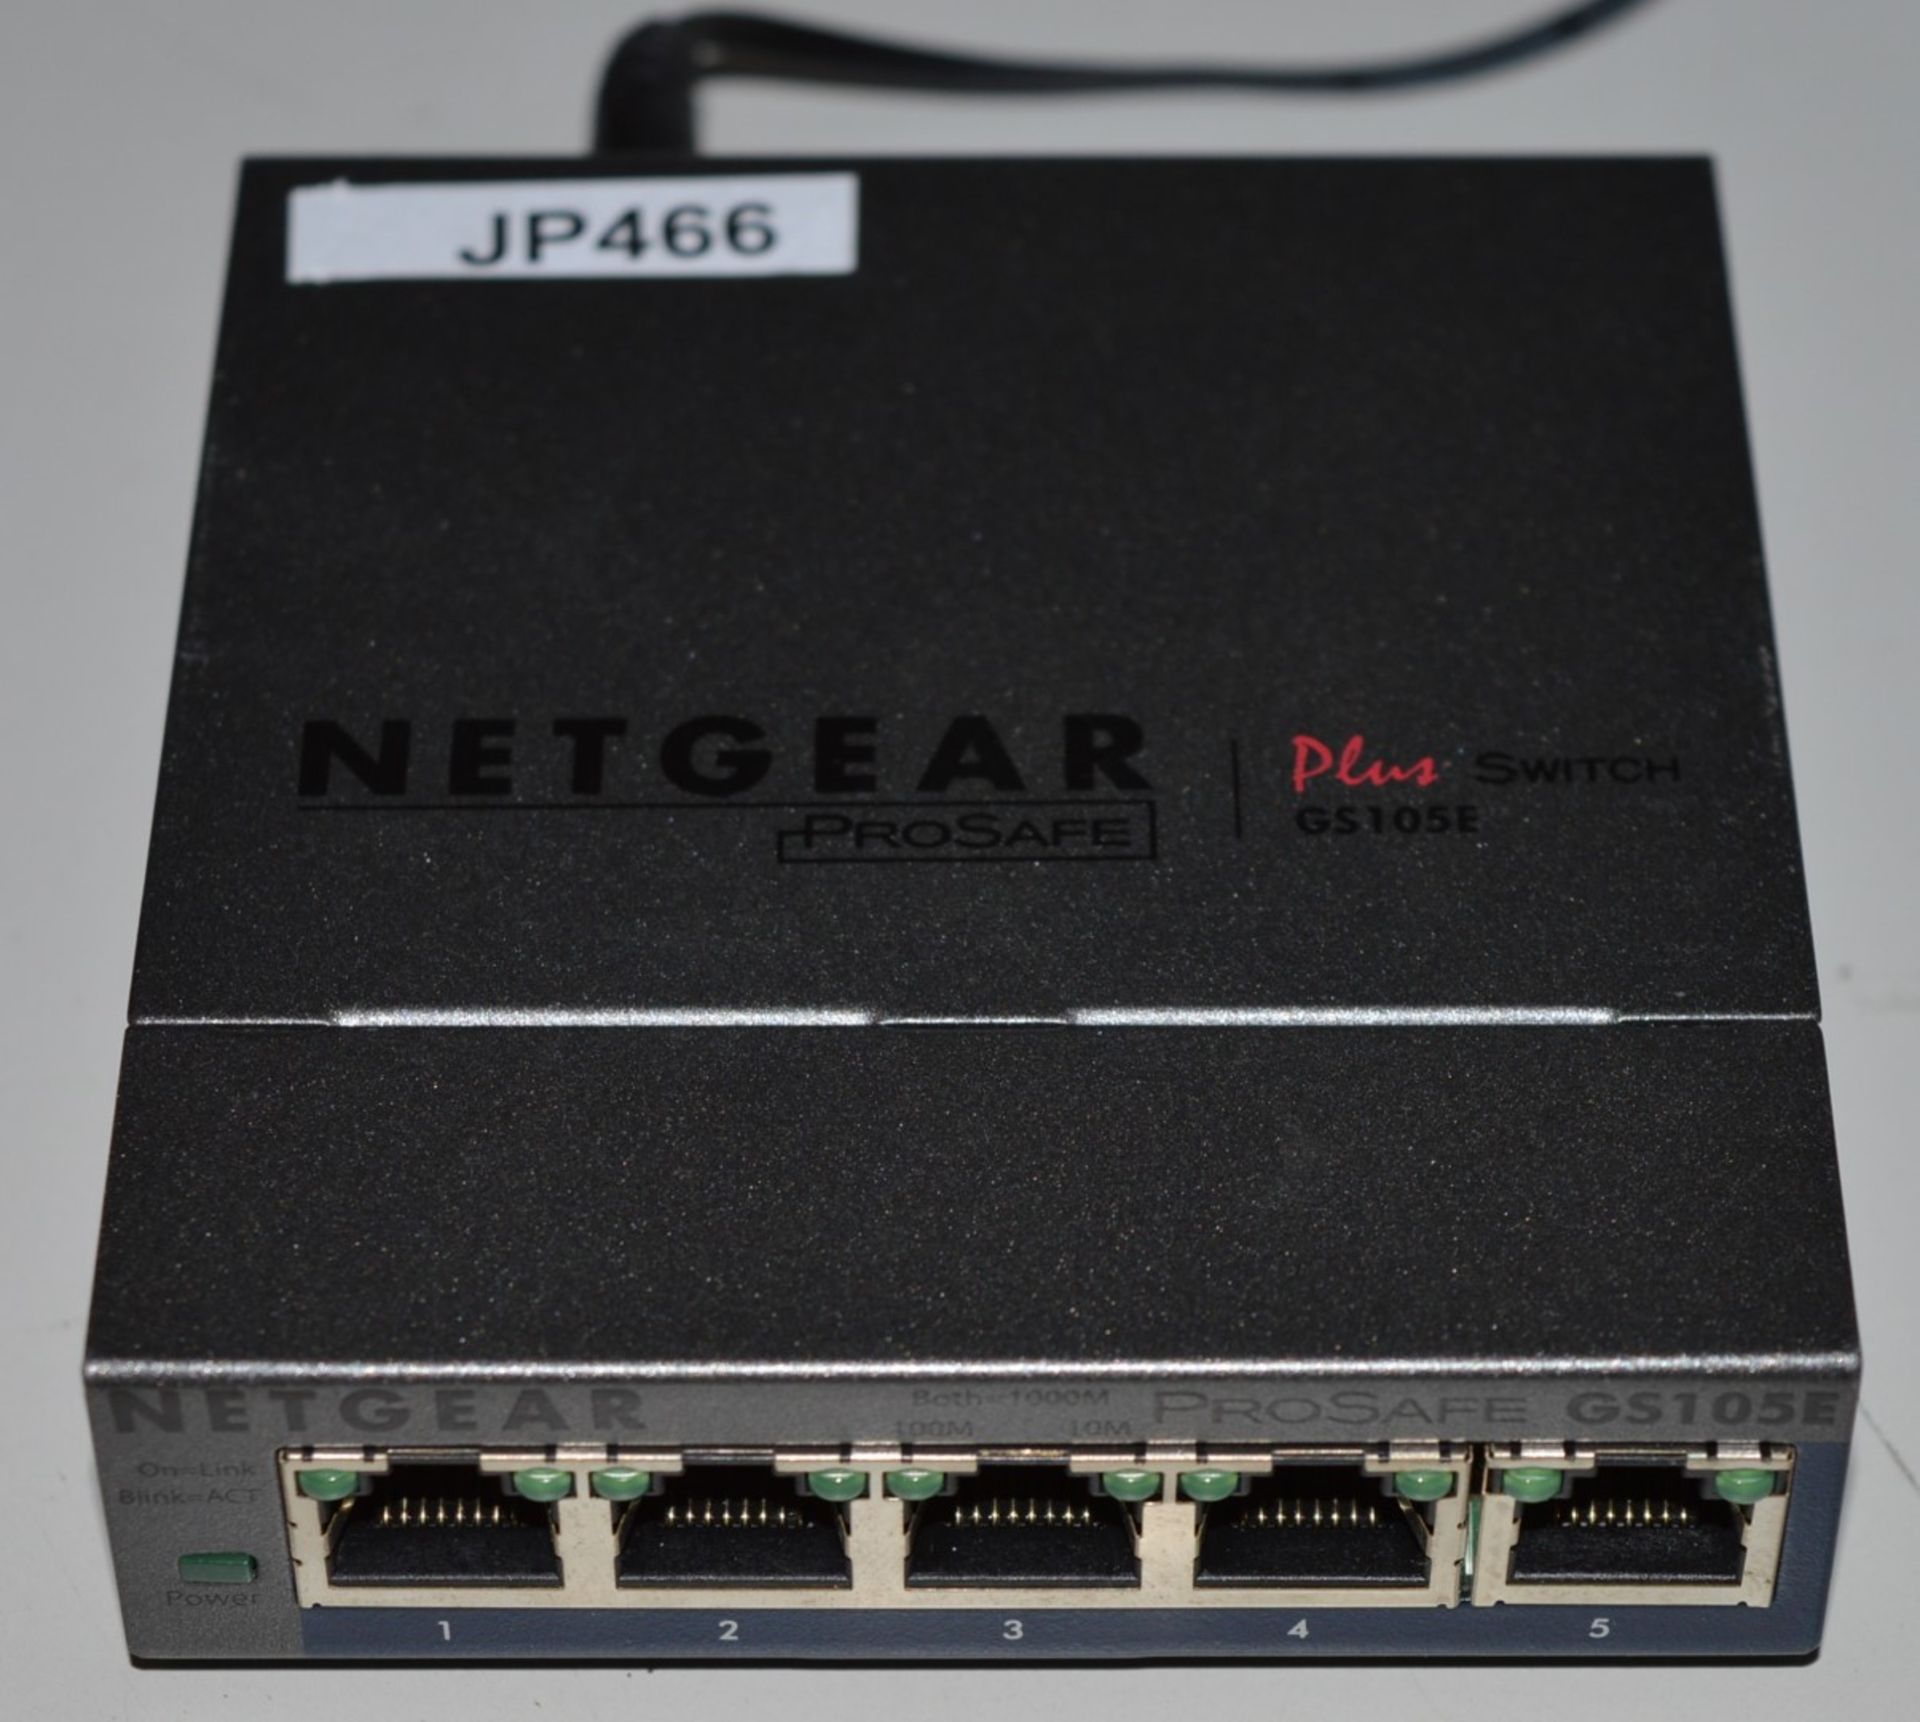 1 x Netgear ProSafe Plus 5-Port Gigabit Mini Switch - Includes Power Adaptor - Ref JP466 - CL300 - - Image 2 of 3